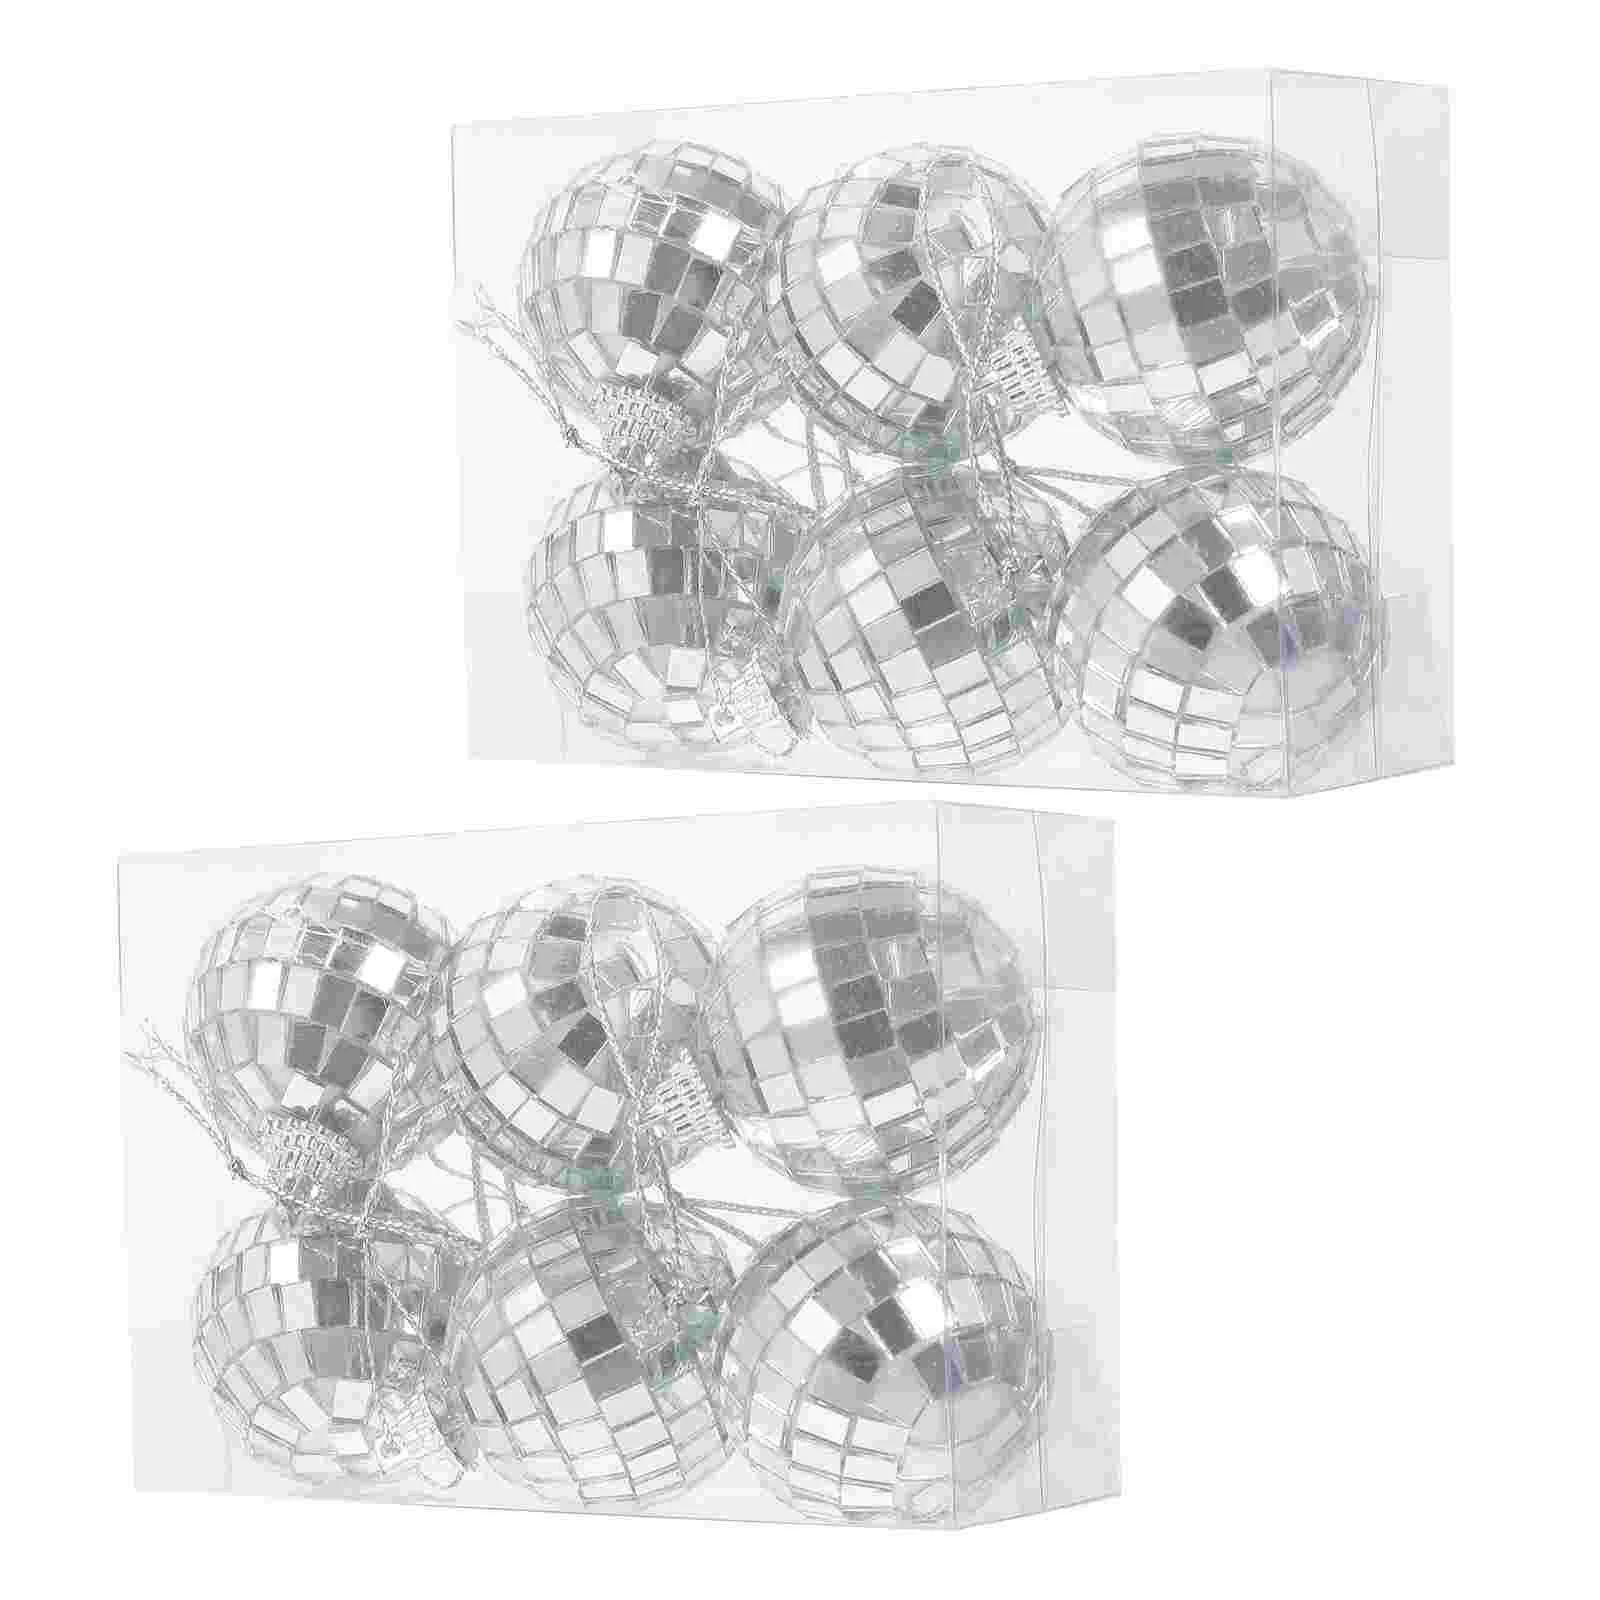 

12 Pcs Disco Reflective Ball Mirror Prom Decor Bar Sphere Glass KTV Showcase Adornment Wedding Hanging Balls Stage Ornament